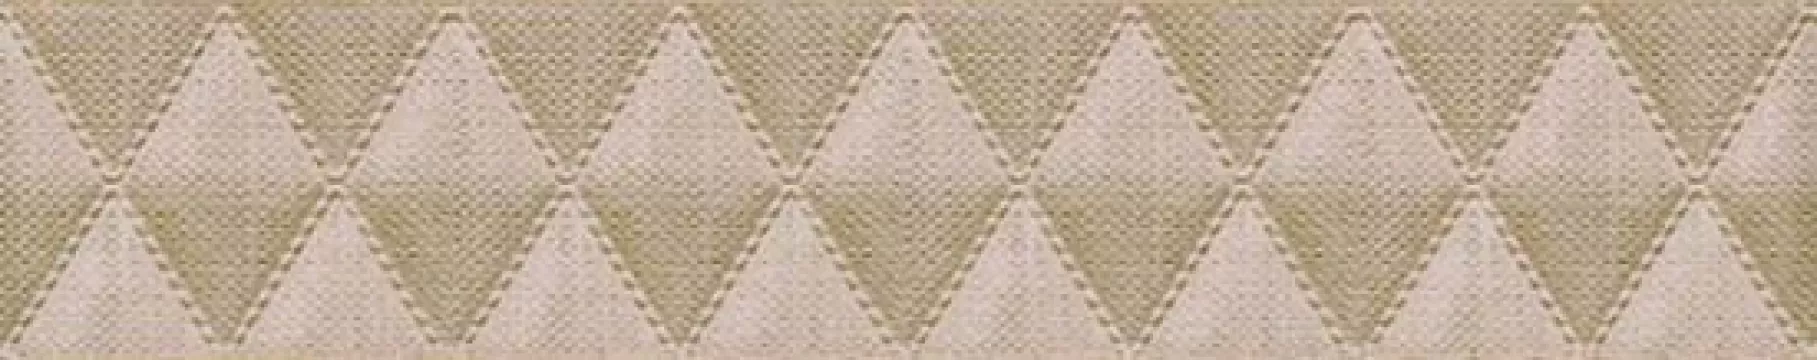 Плитка Azori 32x6 бордюр Beige Geometry Illusio лаппатированная глазурованная